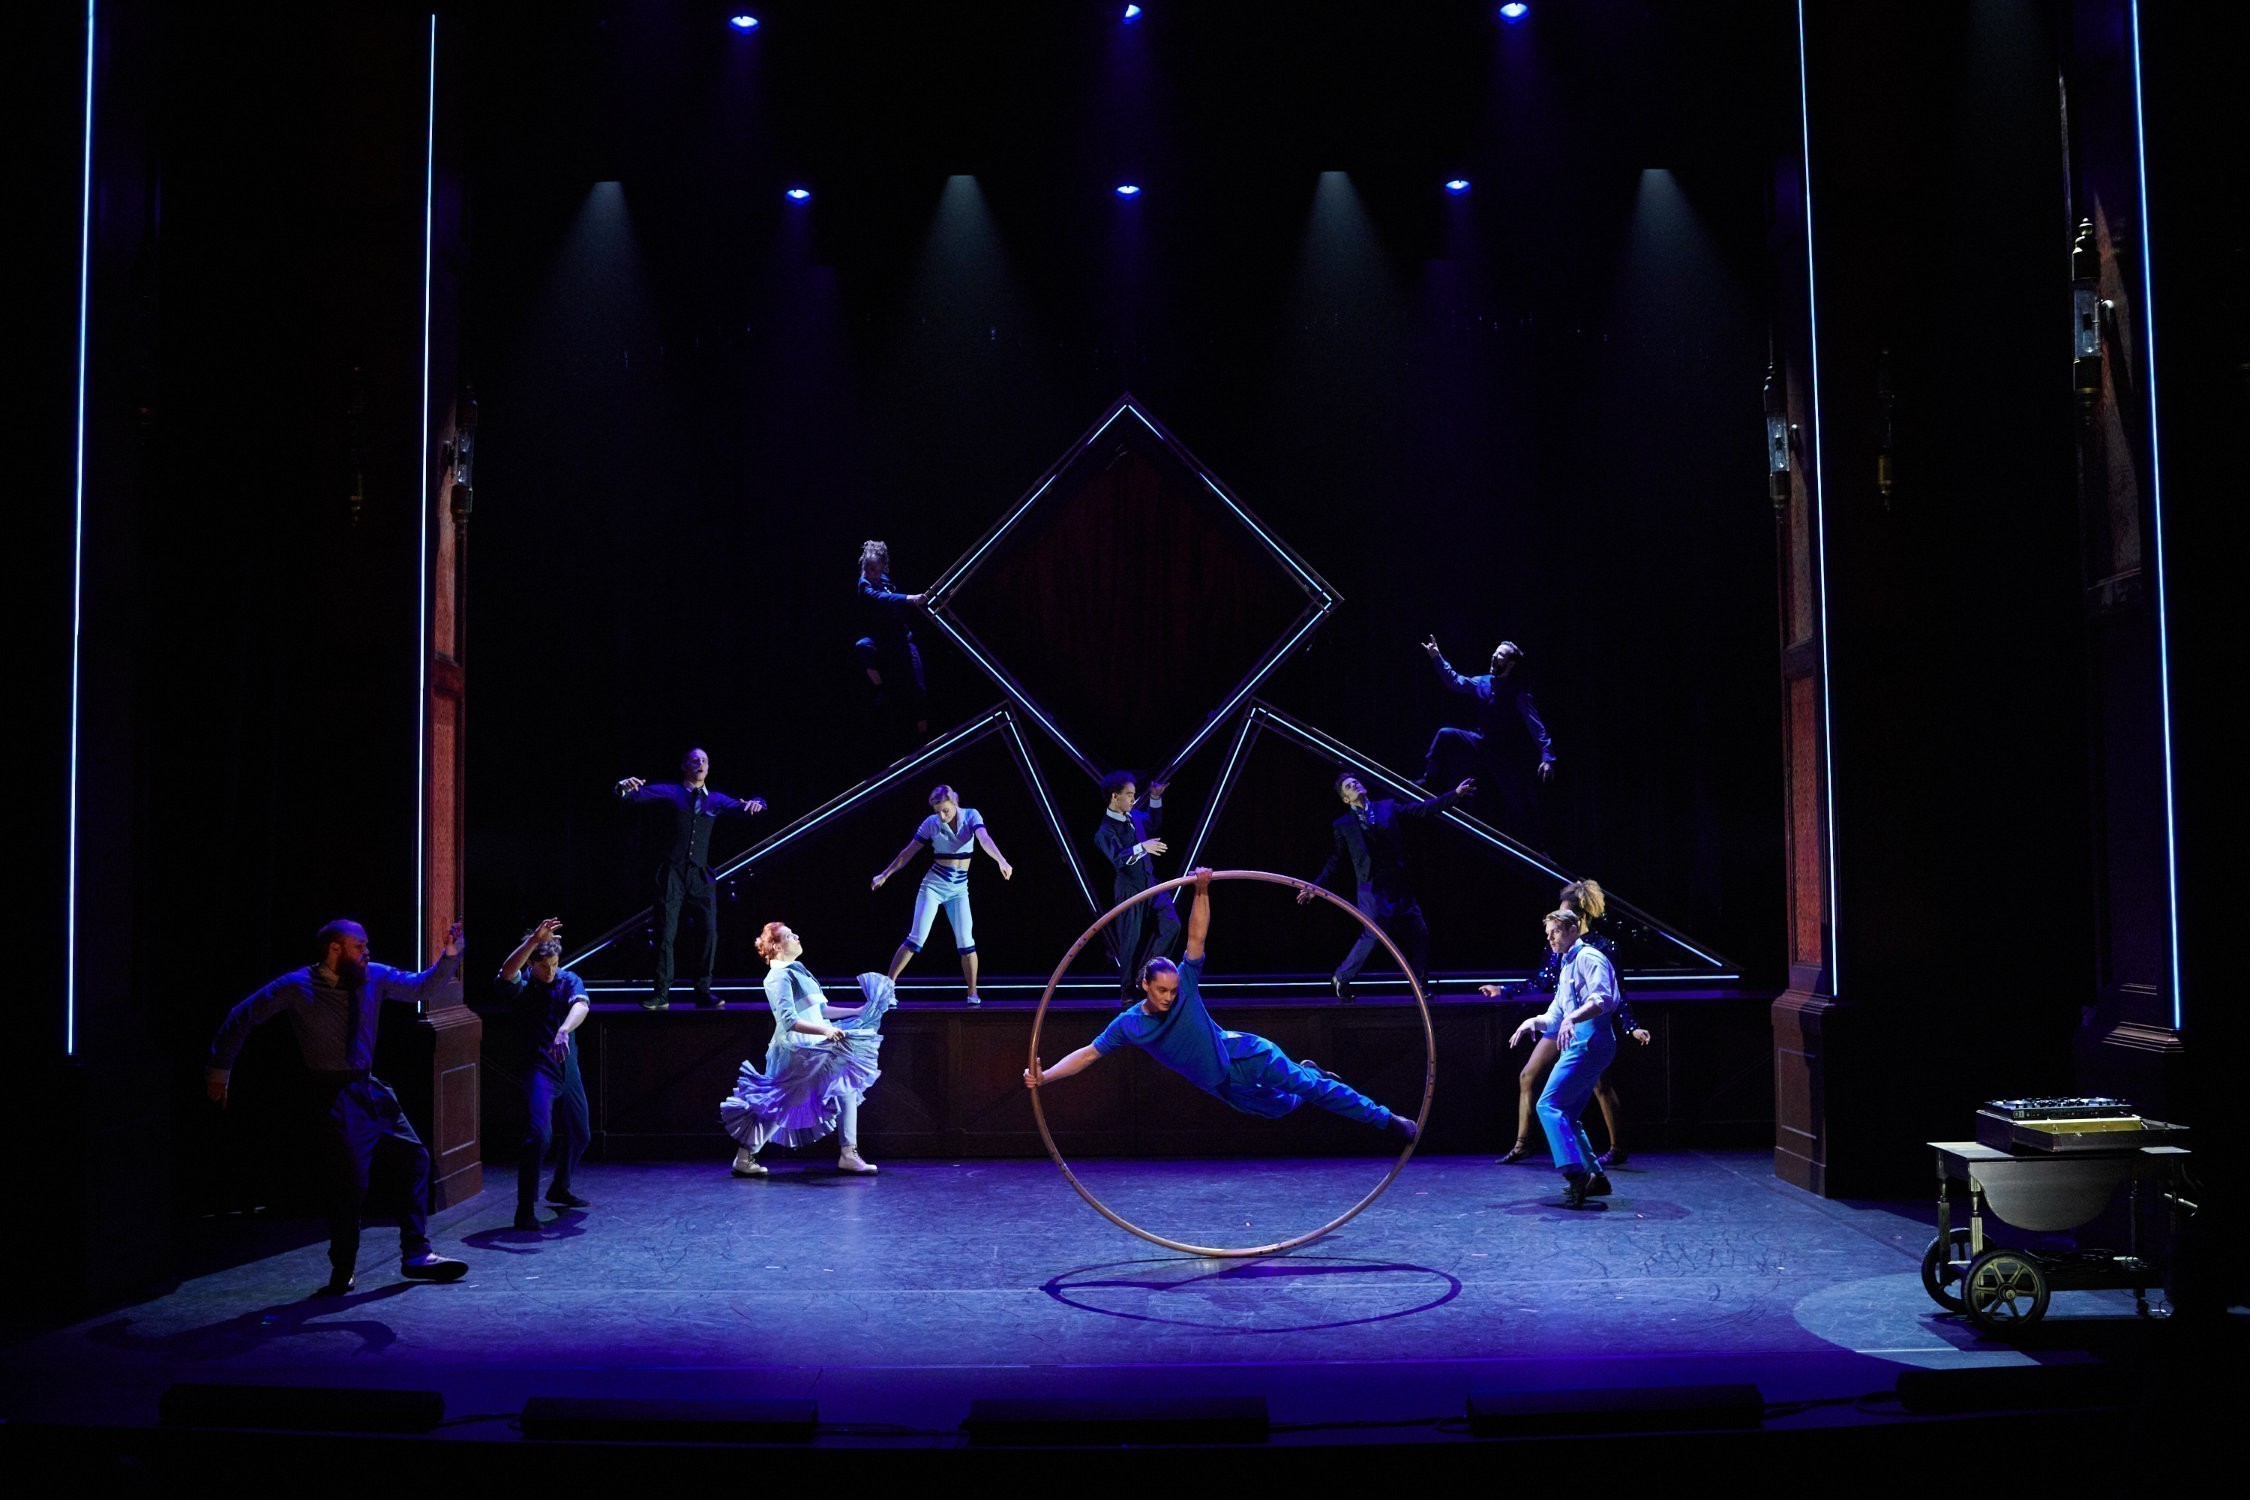 Zirkus Bremen Akrobatik im Cirque Eloize